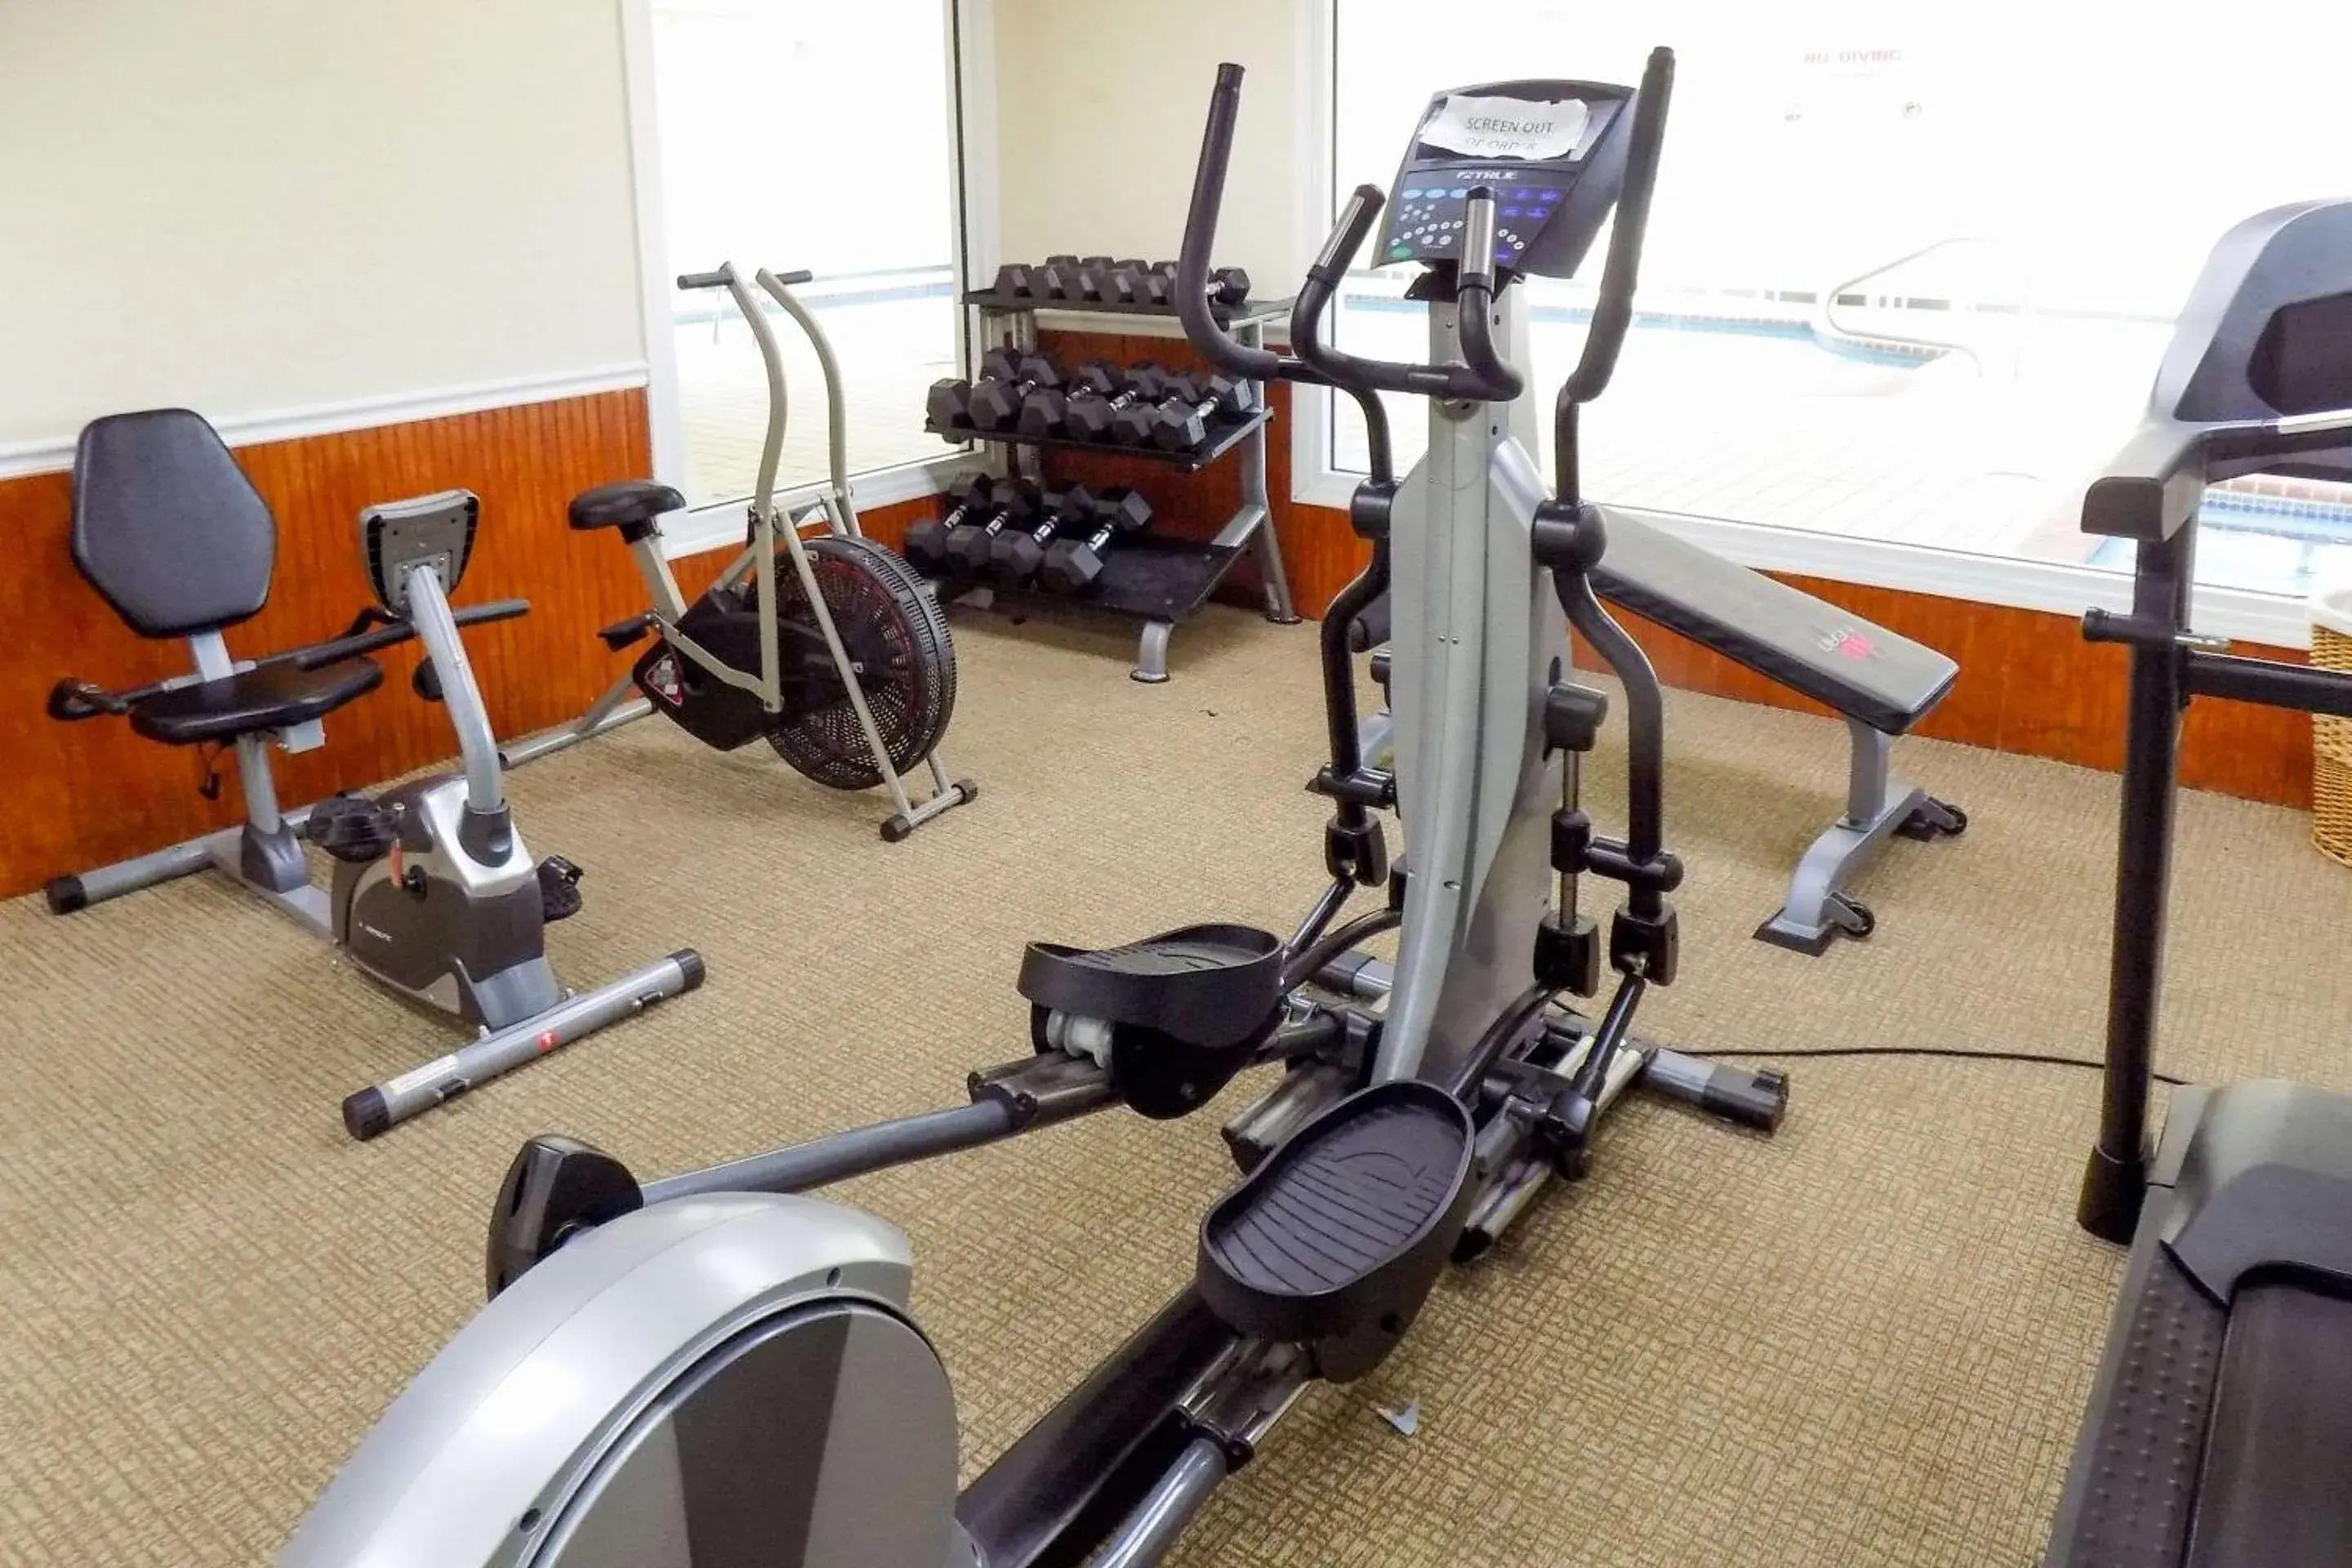 Fitness centre/facilities, Fitness Center/Facilities in Quality Inn Kingdom City, MO